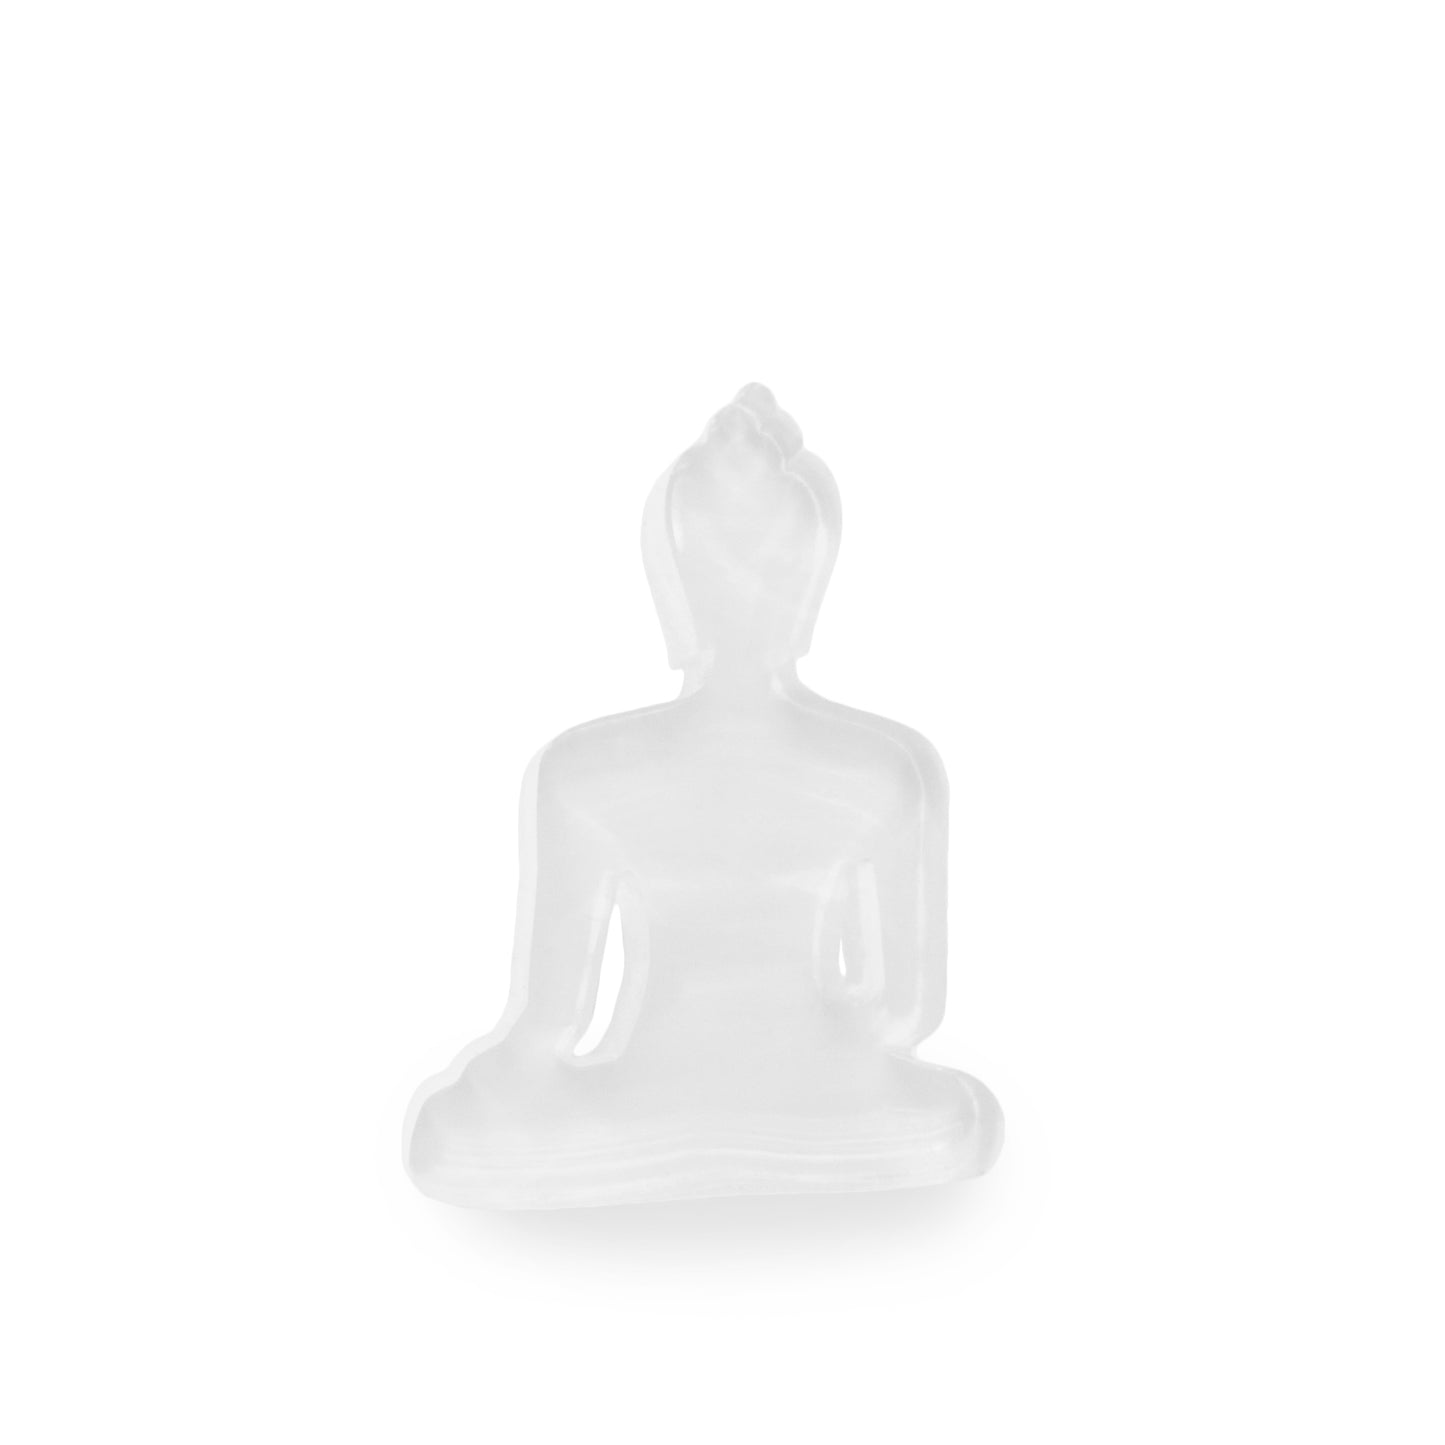 Buddha statue set of 3 - Gray, White and Light Blue